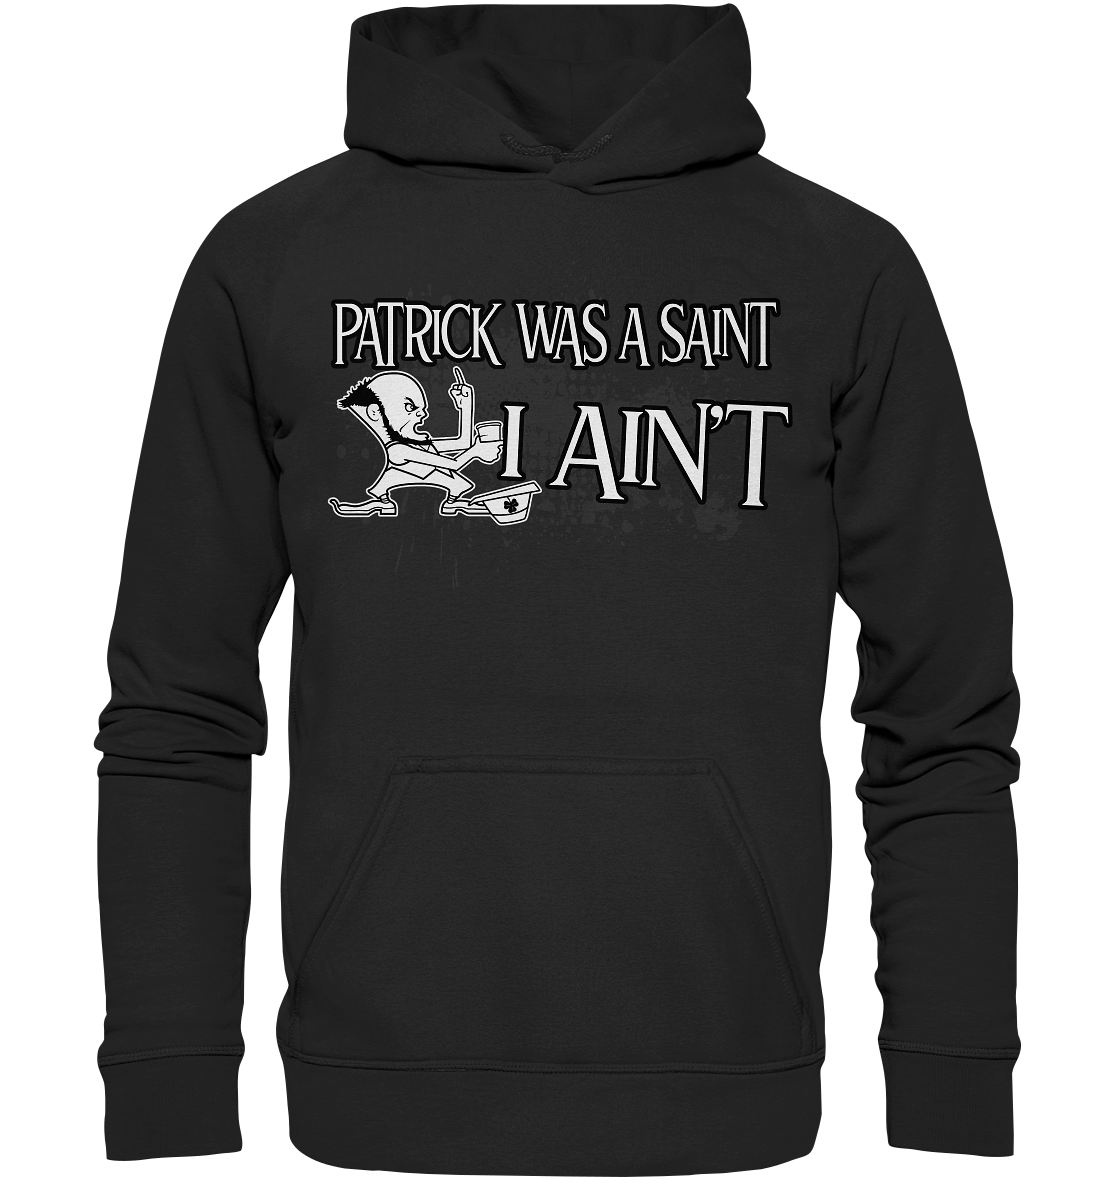 Patrick Was A Saint "I Ain't" - Basic Unisex Hoodie